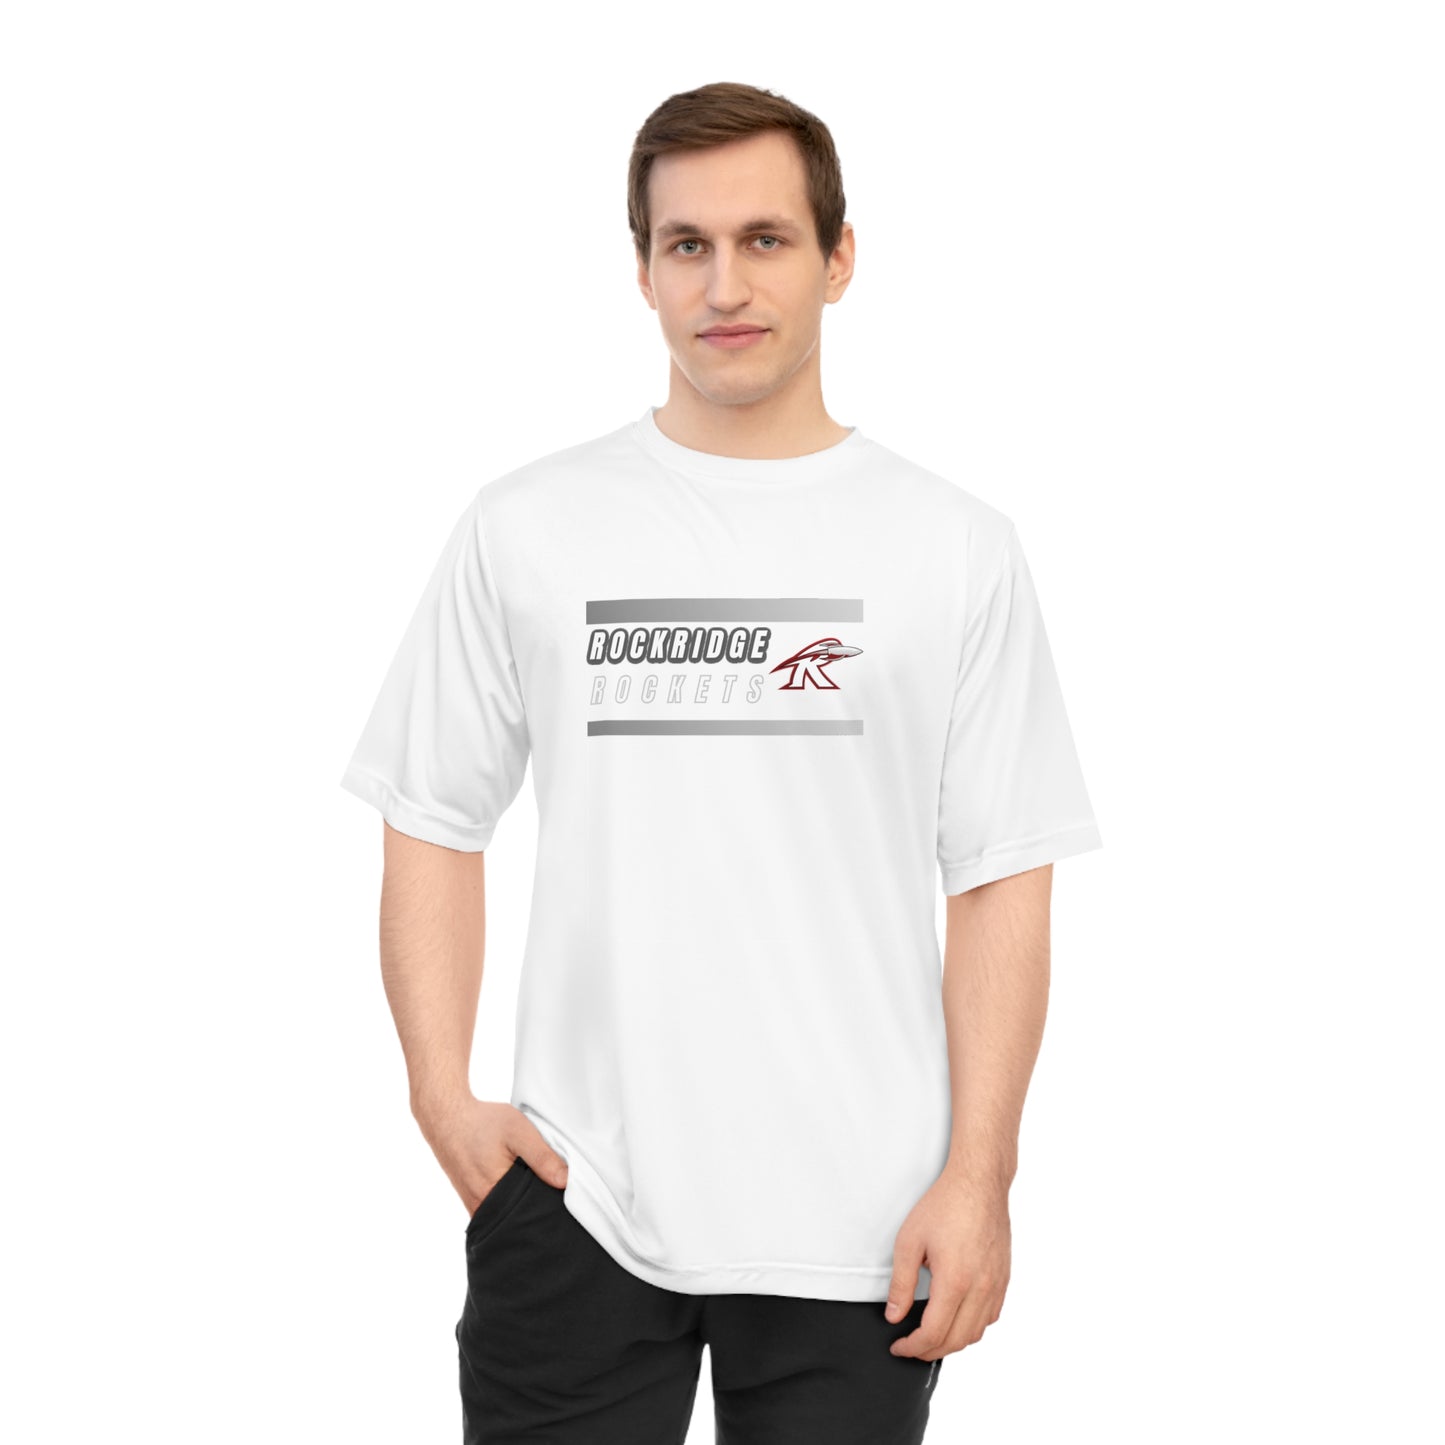 Rockridge Rockets - Unisex Zone Performance T-shirt